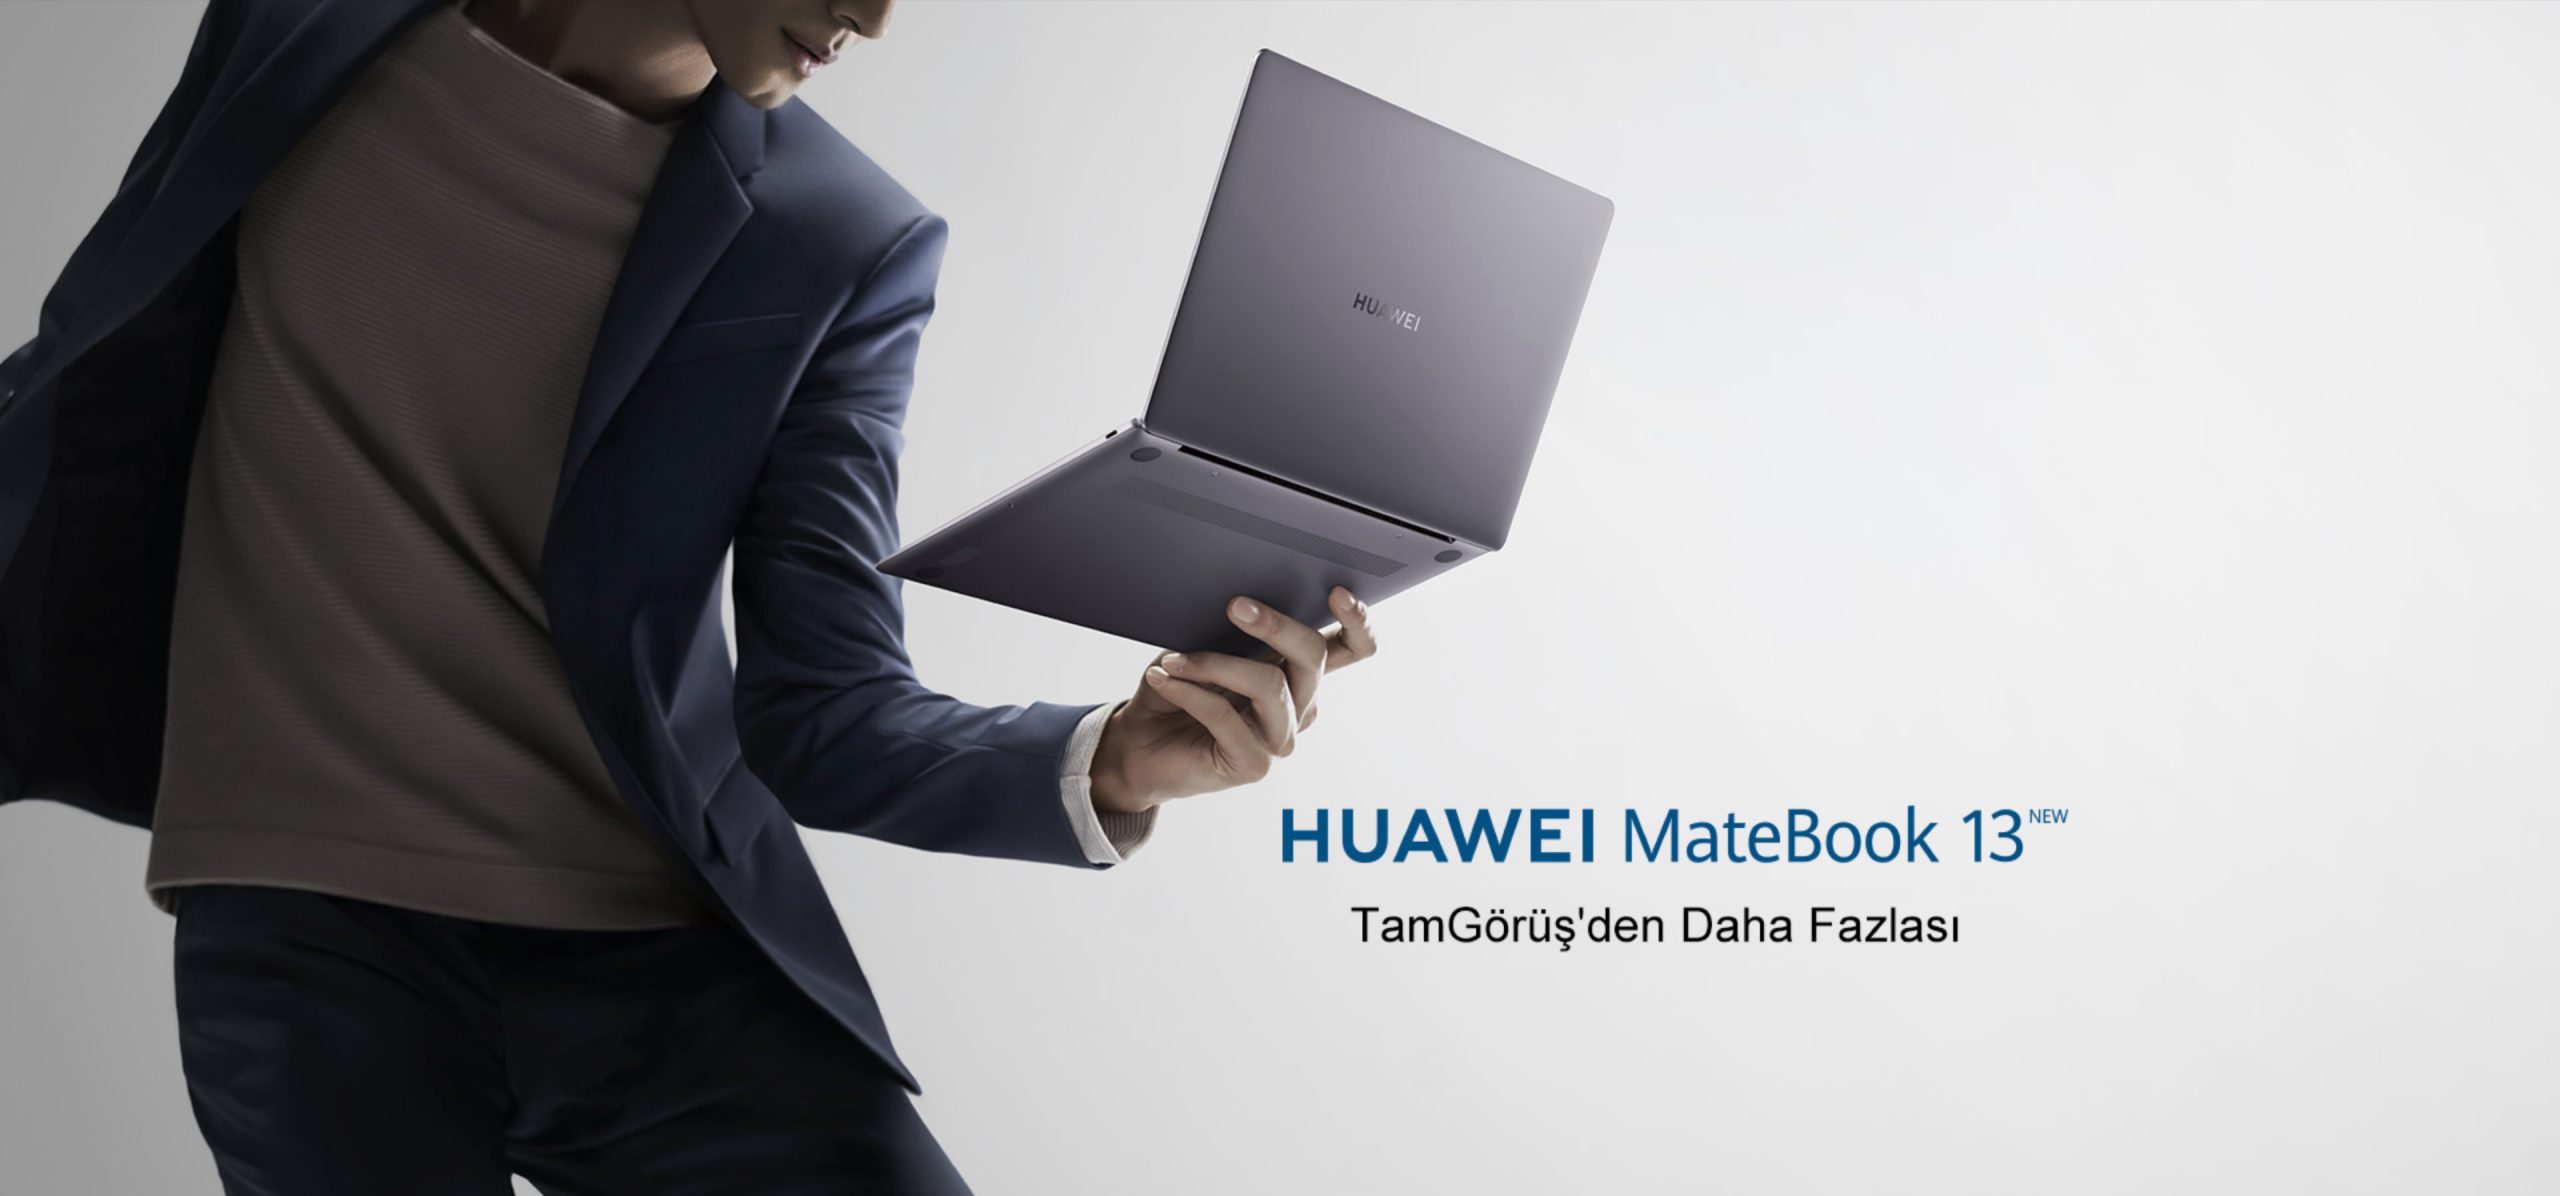 Huawei Online Mağaza’da Harika MateBook 13 Fırsatı!